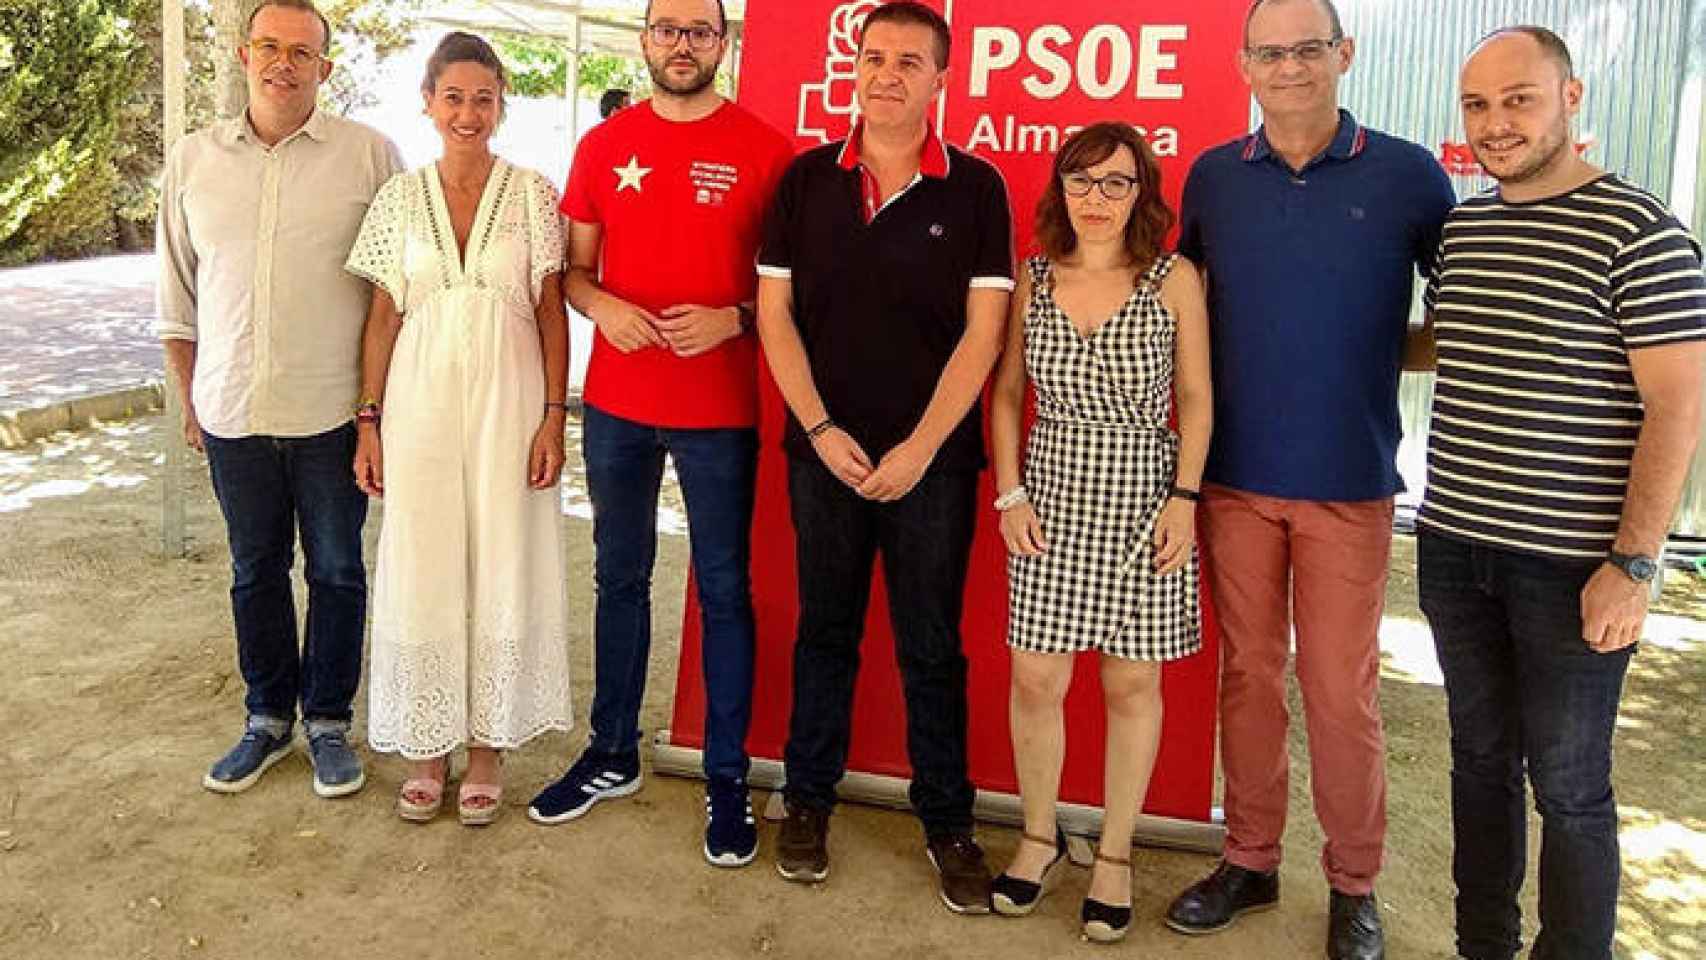 FOTO: PSOE-CLM